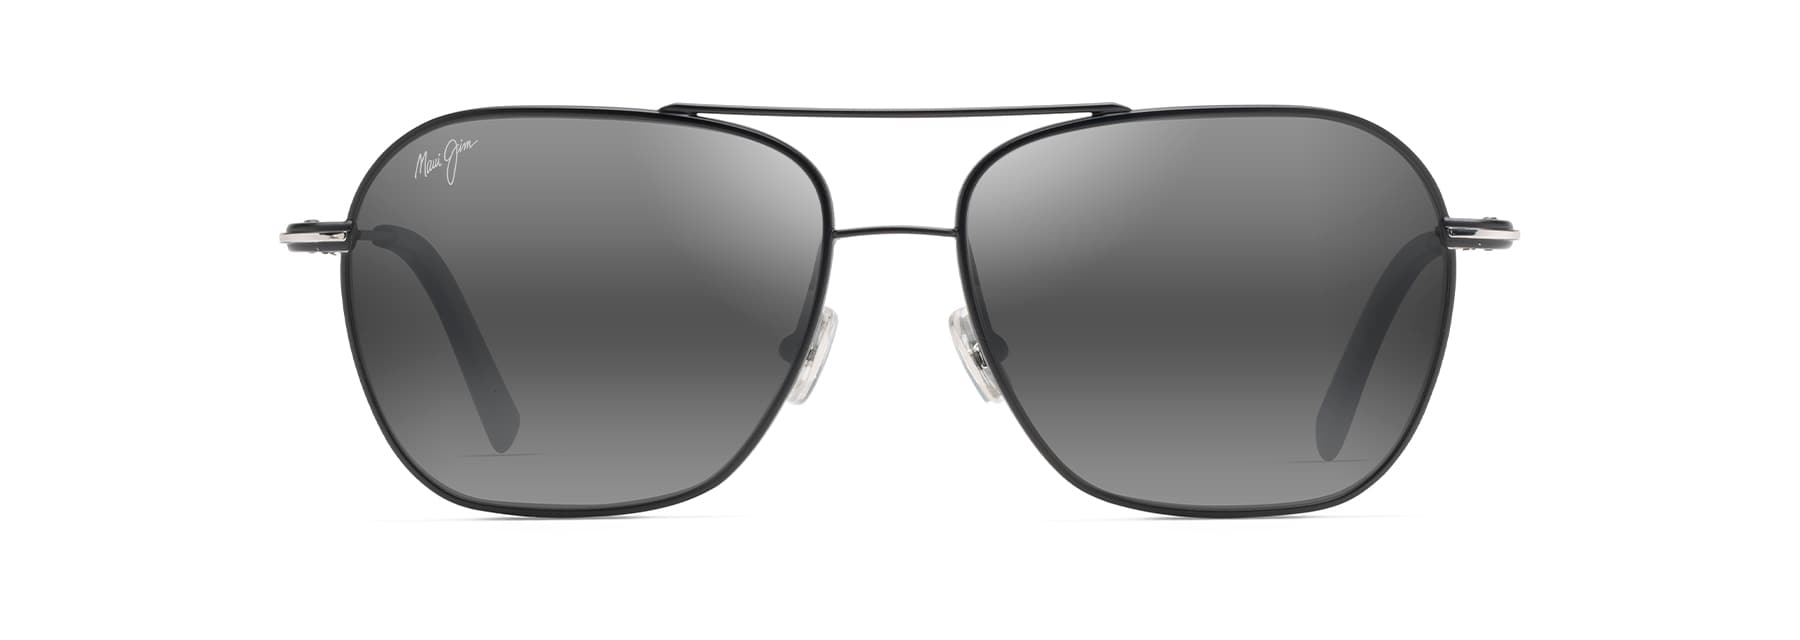 MANO Aviators Sunglasses